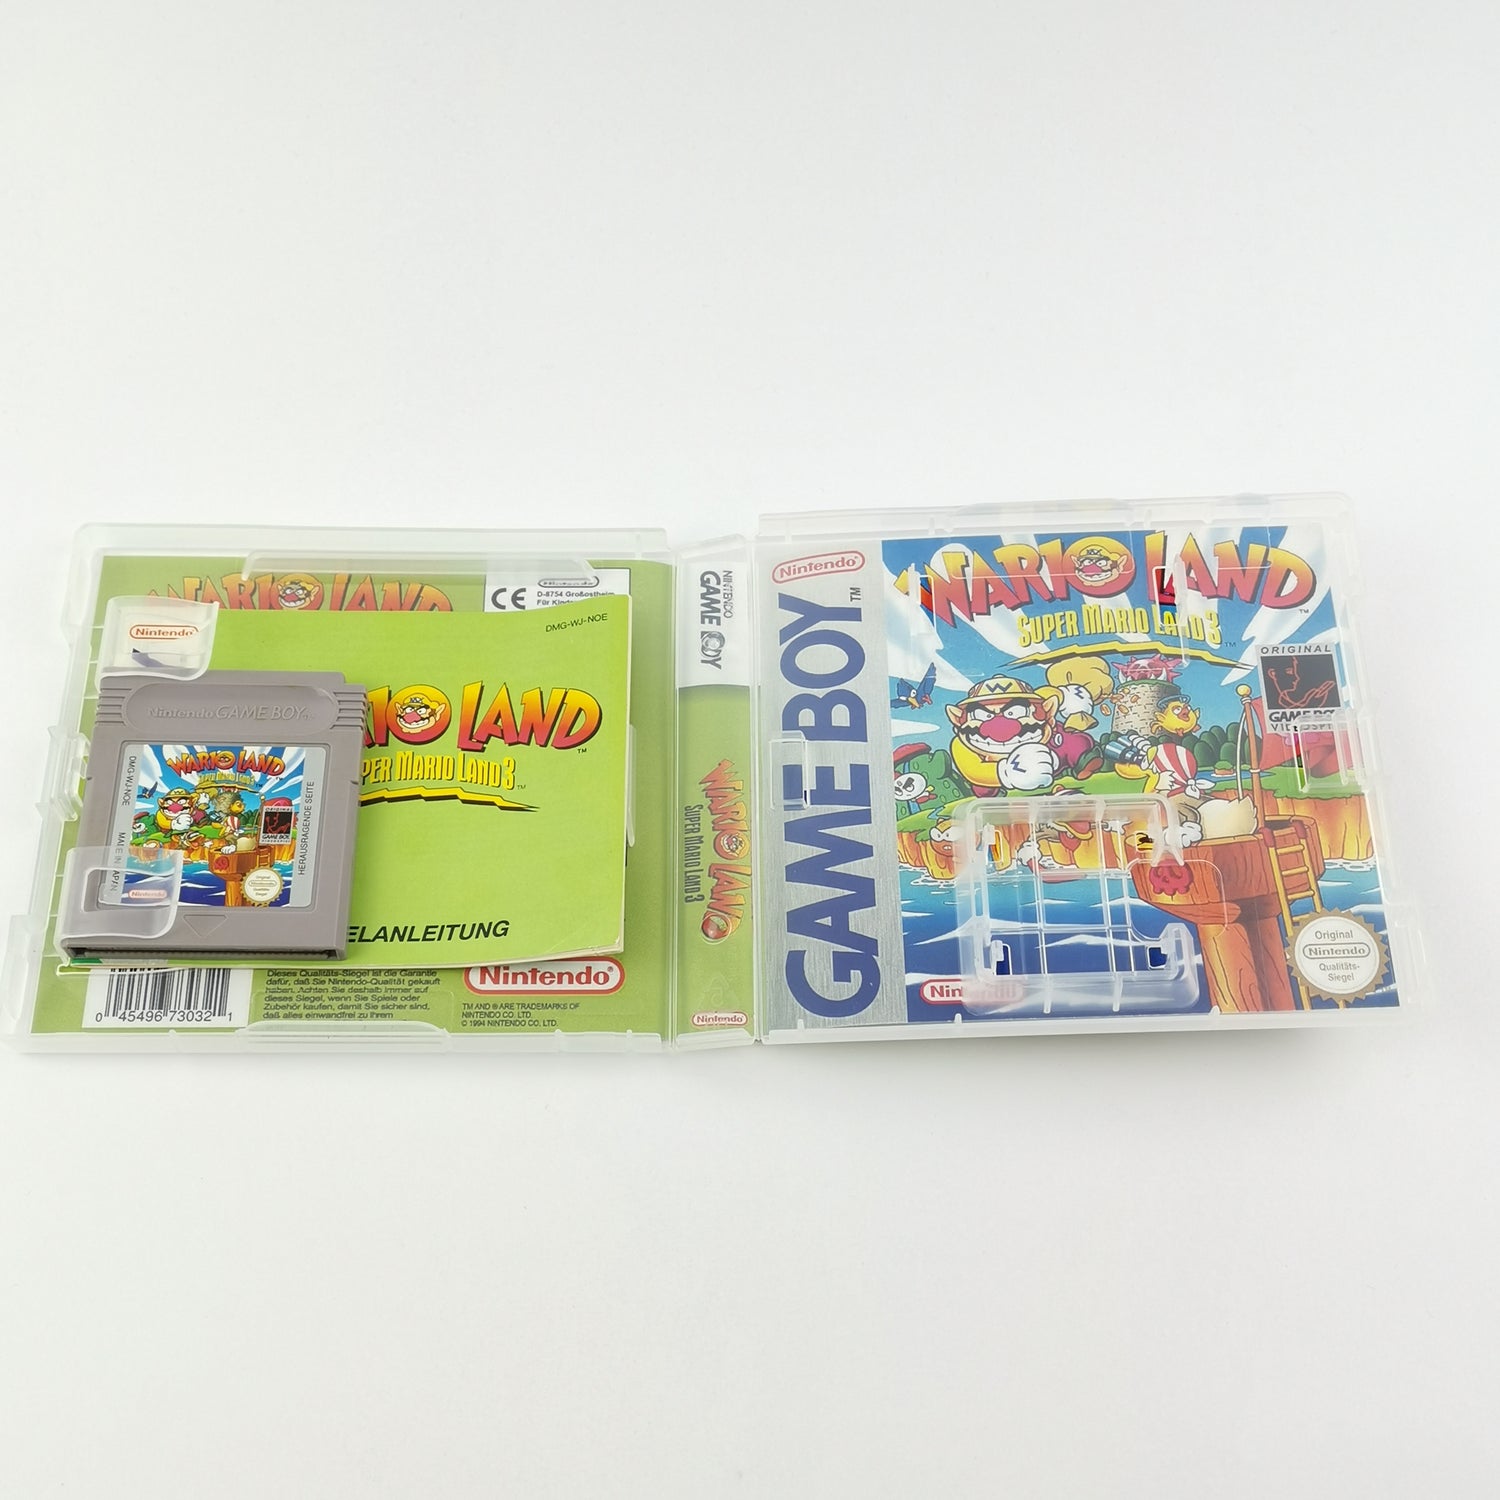 Nintendo Game Boy Classic Spiel : Wario Land - Modul Anleitung PAL NOE